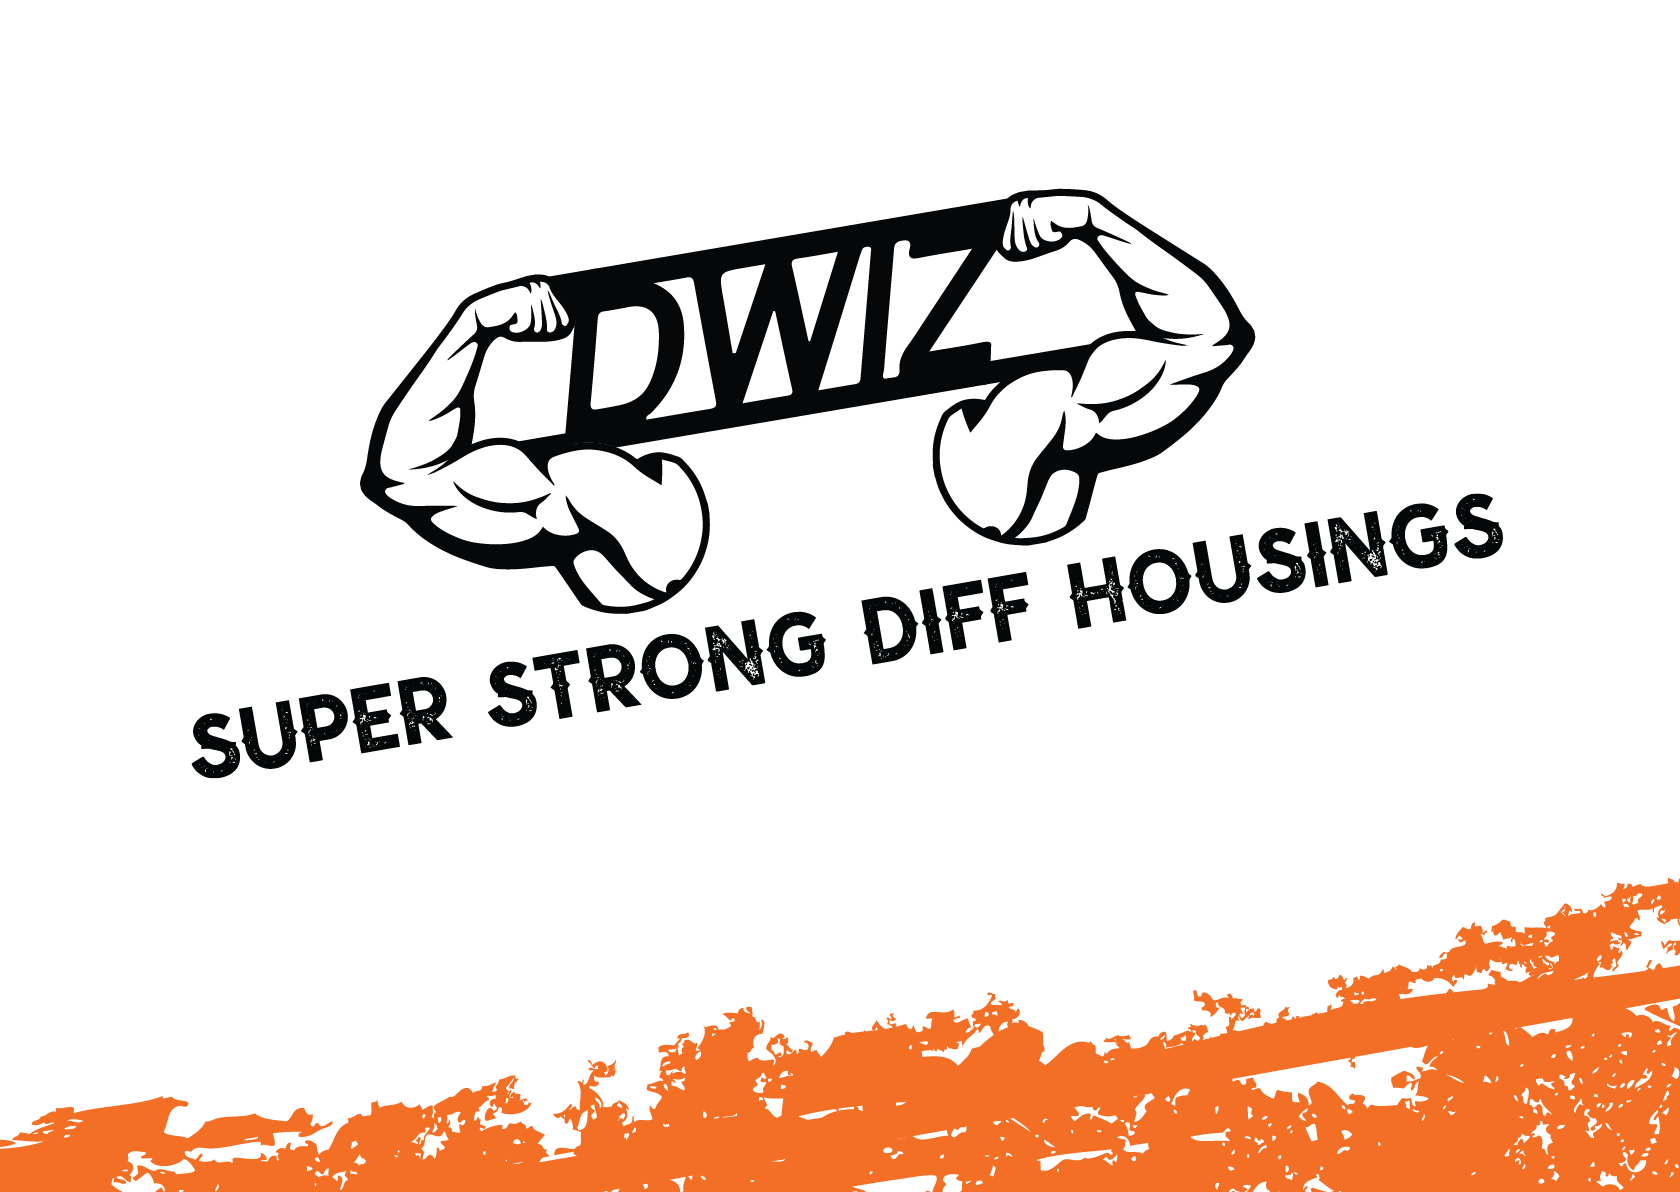 Dwiz Diff Housing